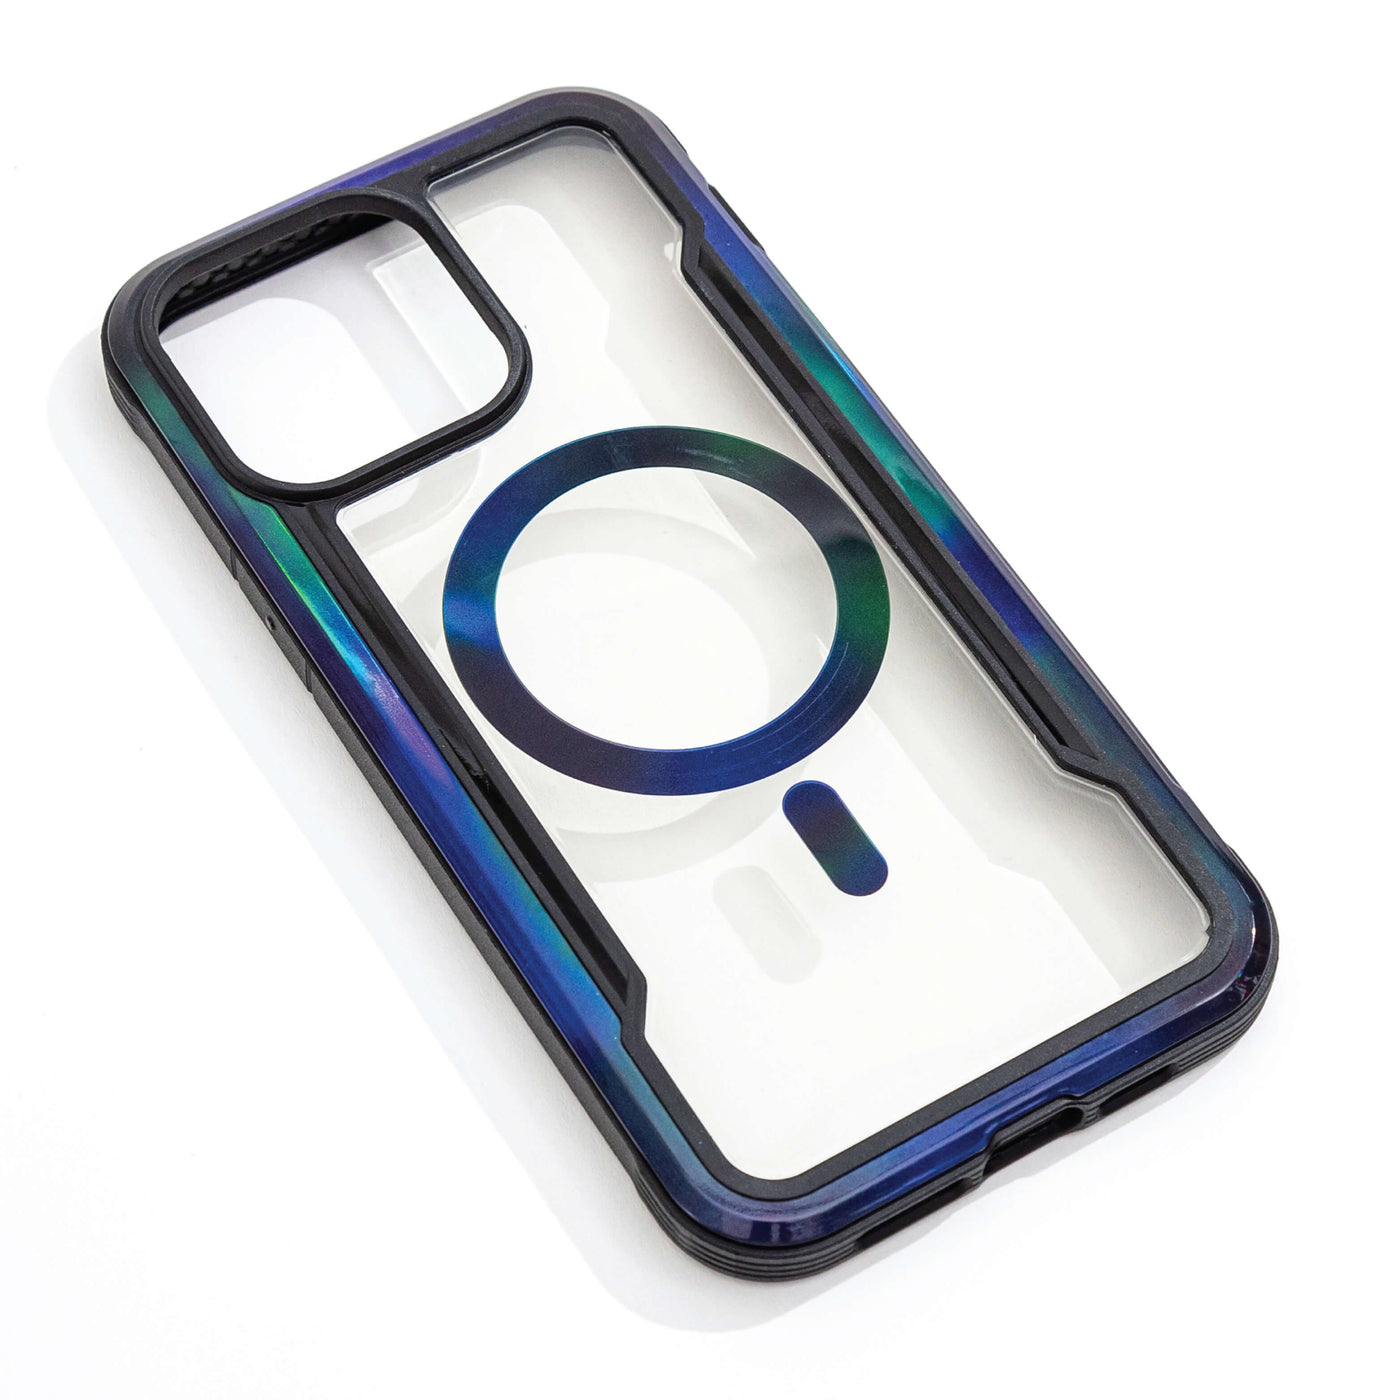 iPhone 15 Pro Max Case - Shield 2.0 Onyx Black